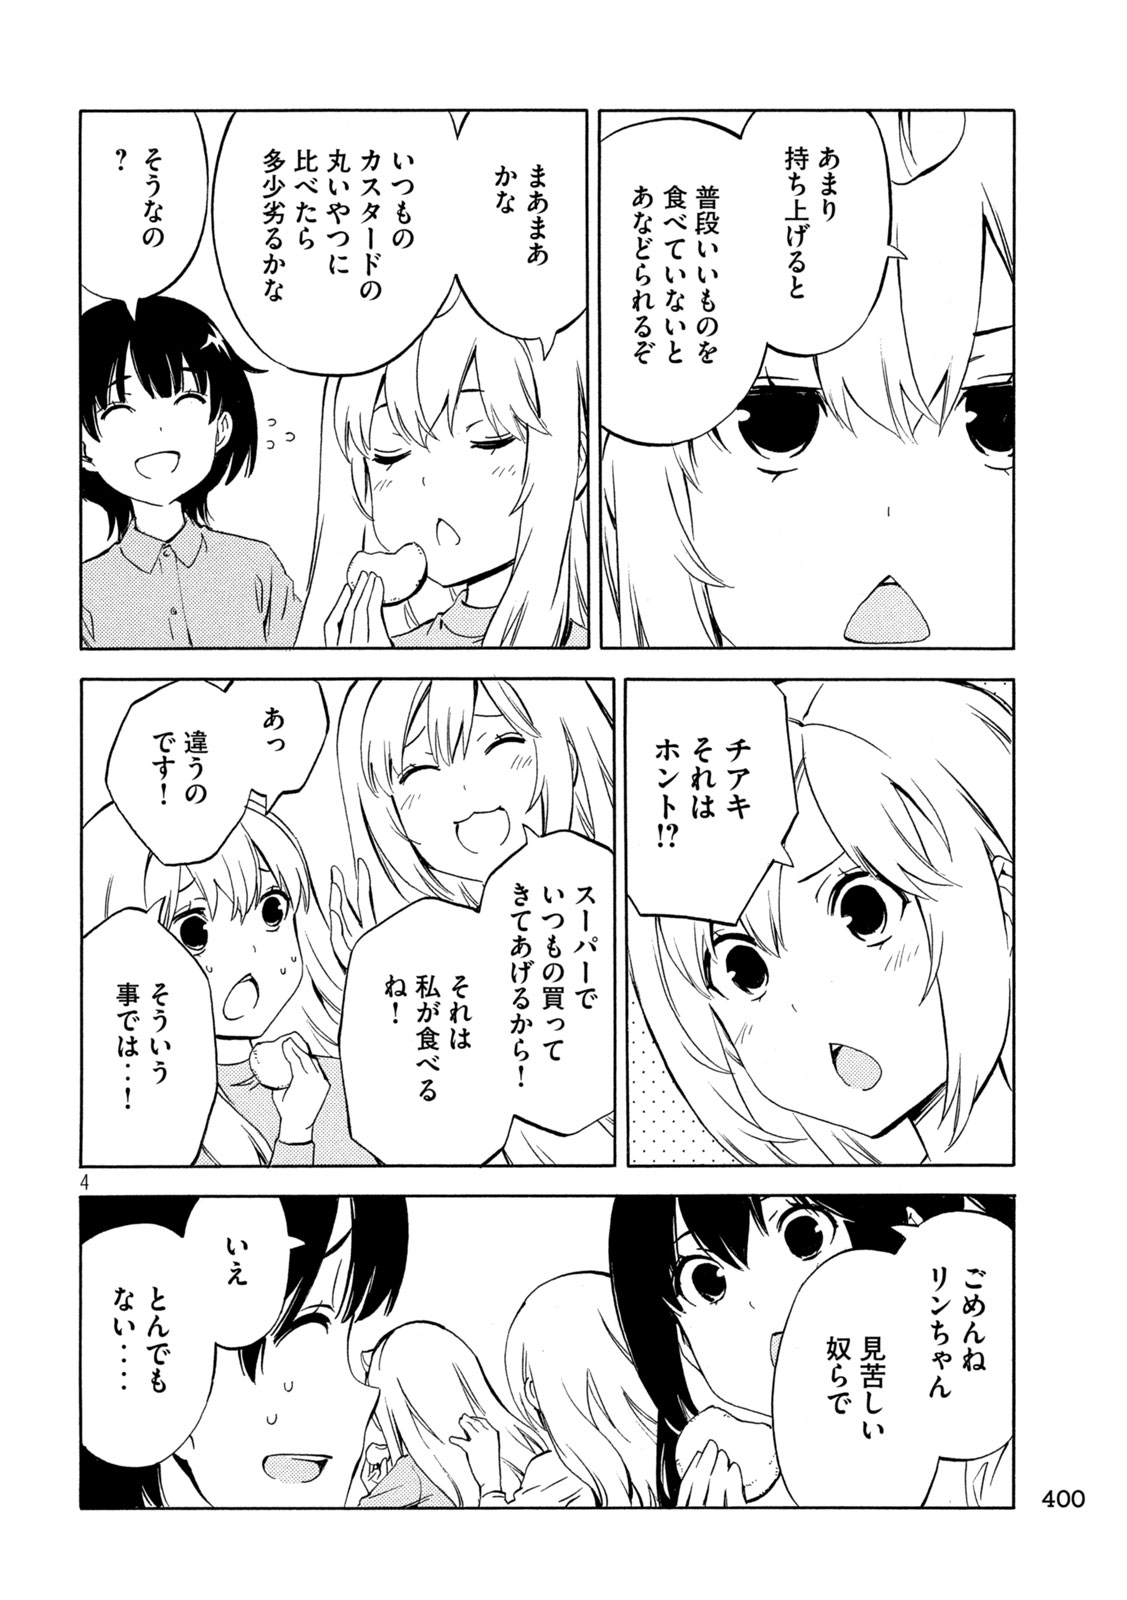 Minami-ke - Chapter 486 - Page 4